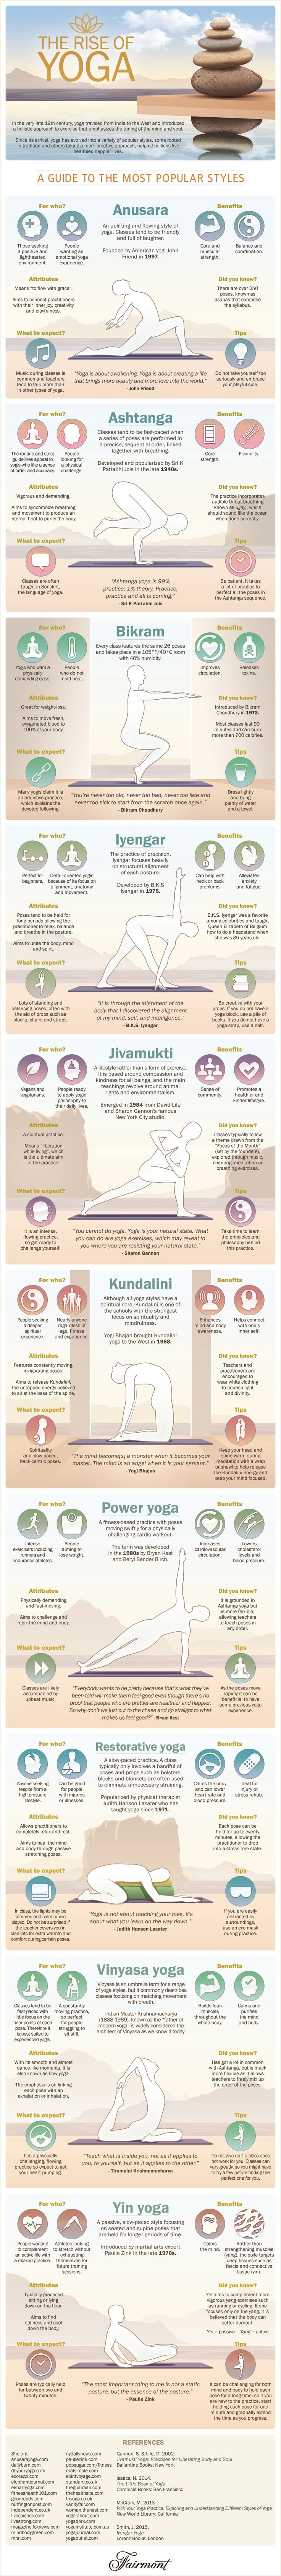 Bikram, Ashtanga, power yoga and Anusara explained.